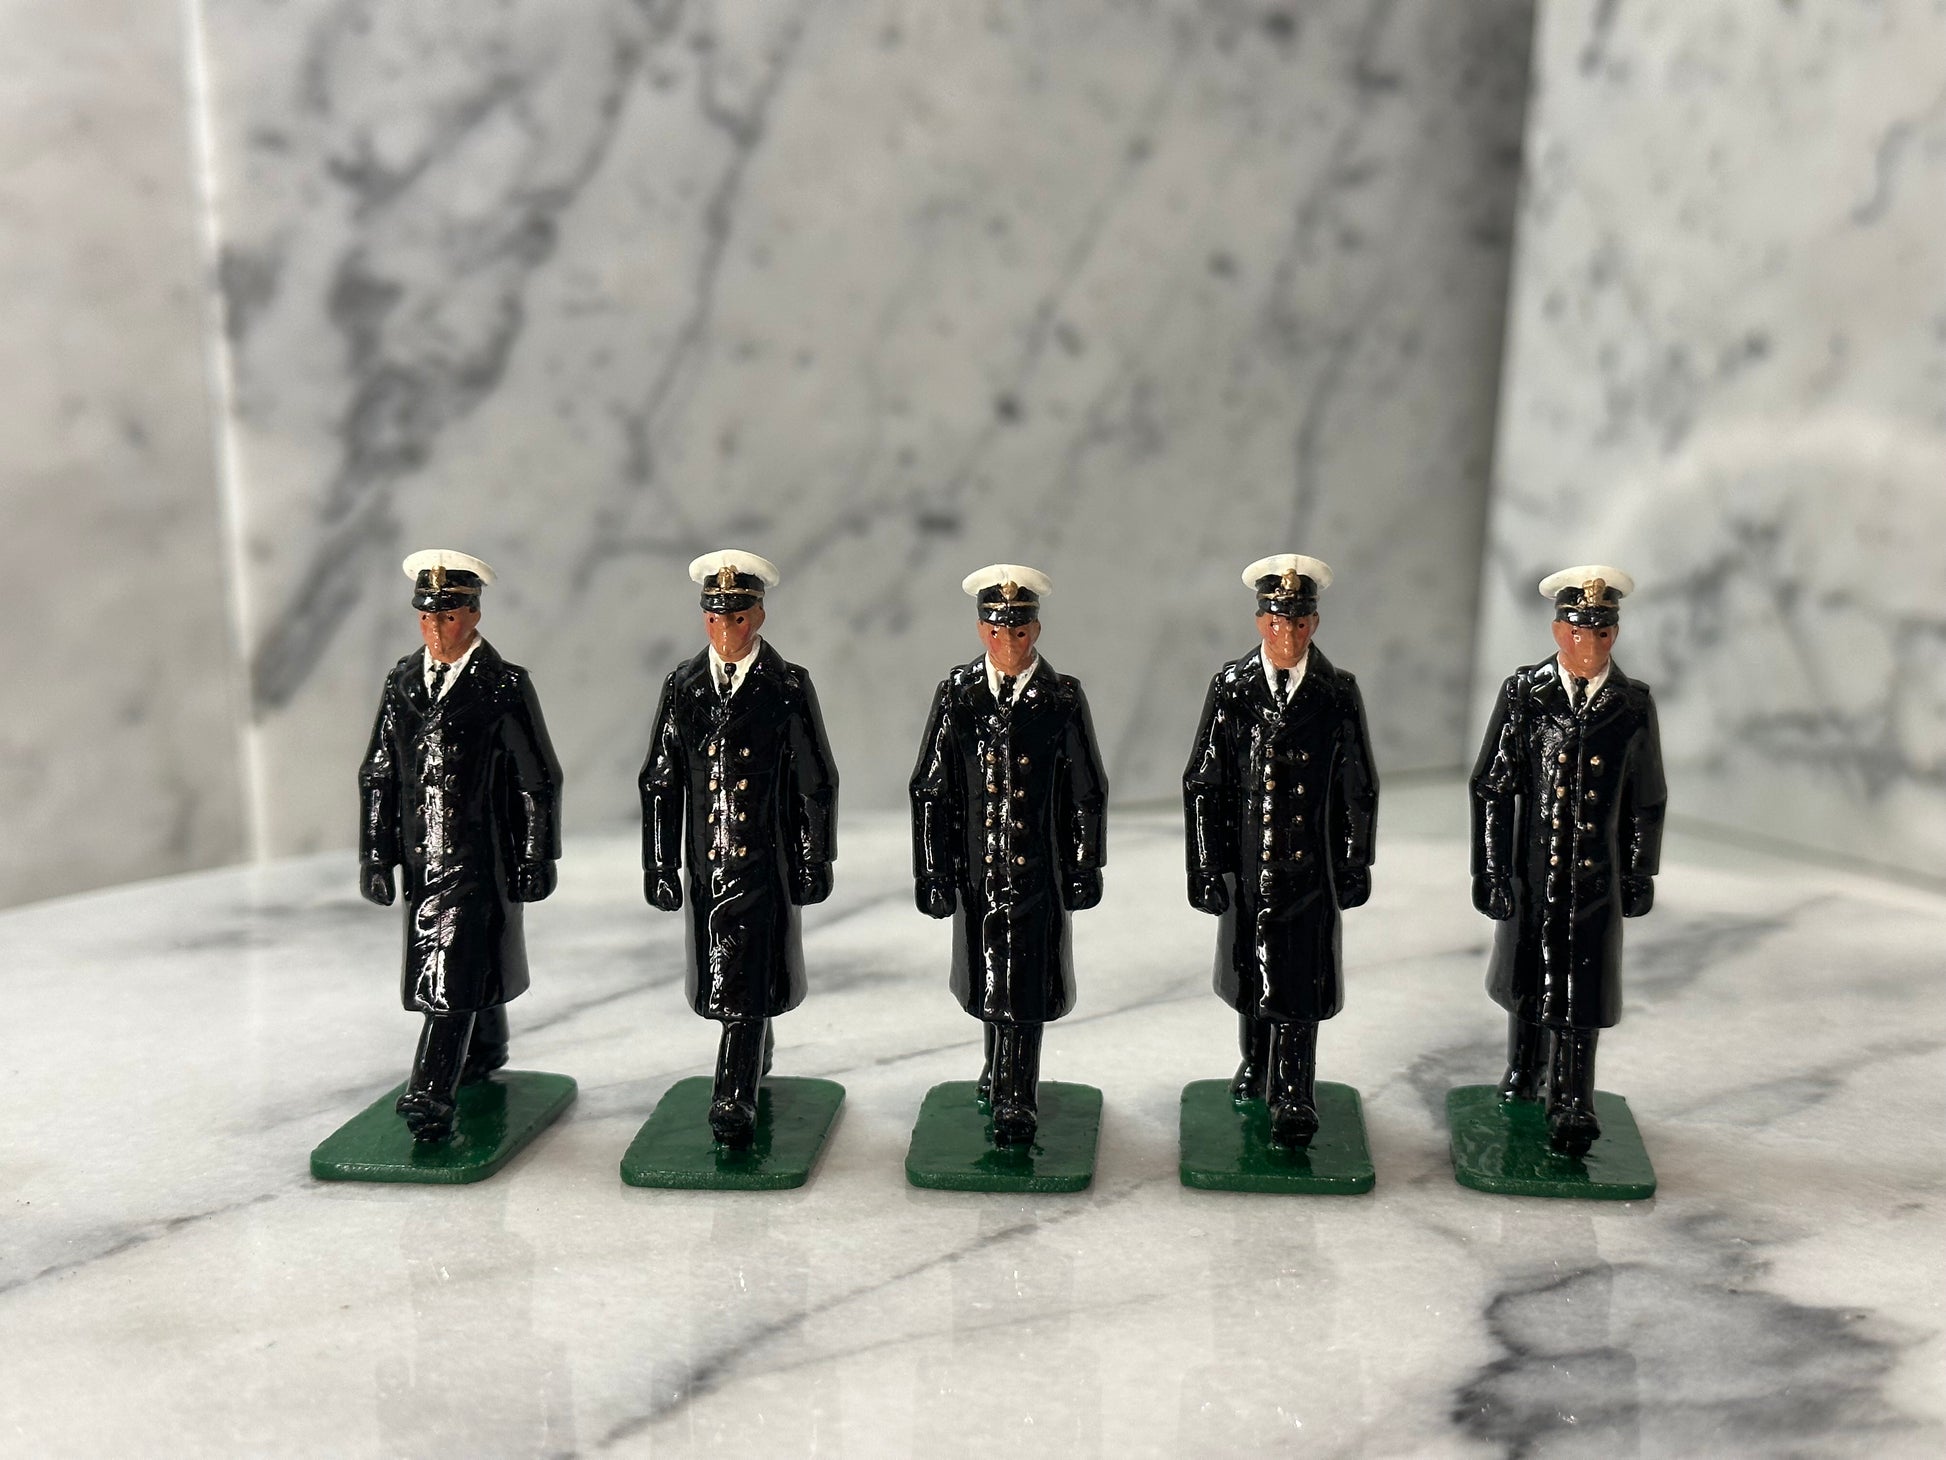 Collectible toy soldier miniature army men Navy Midshipmen in Winter Dress.